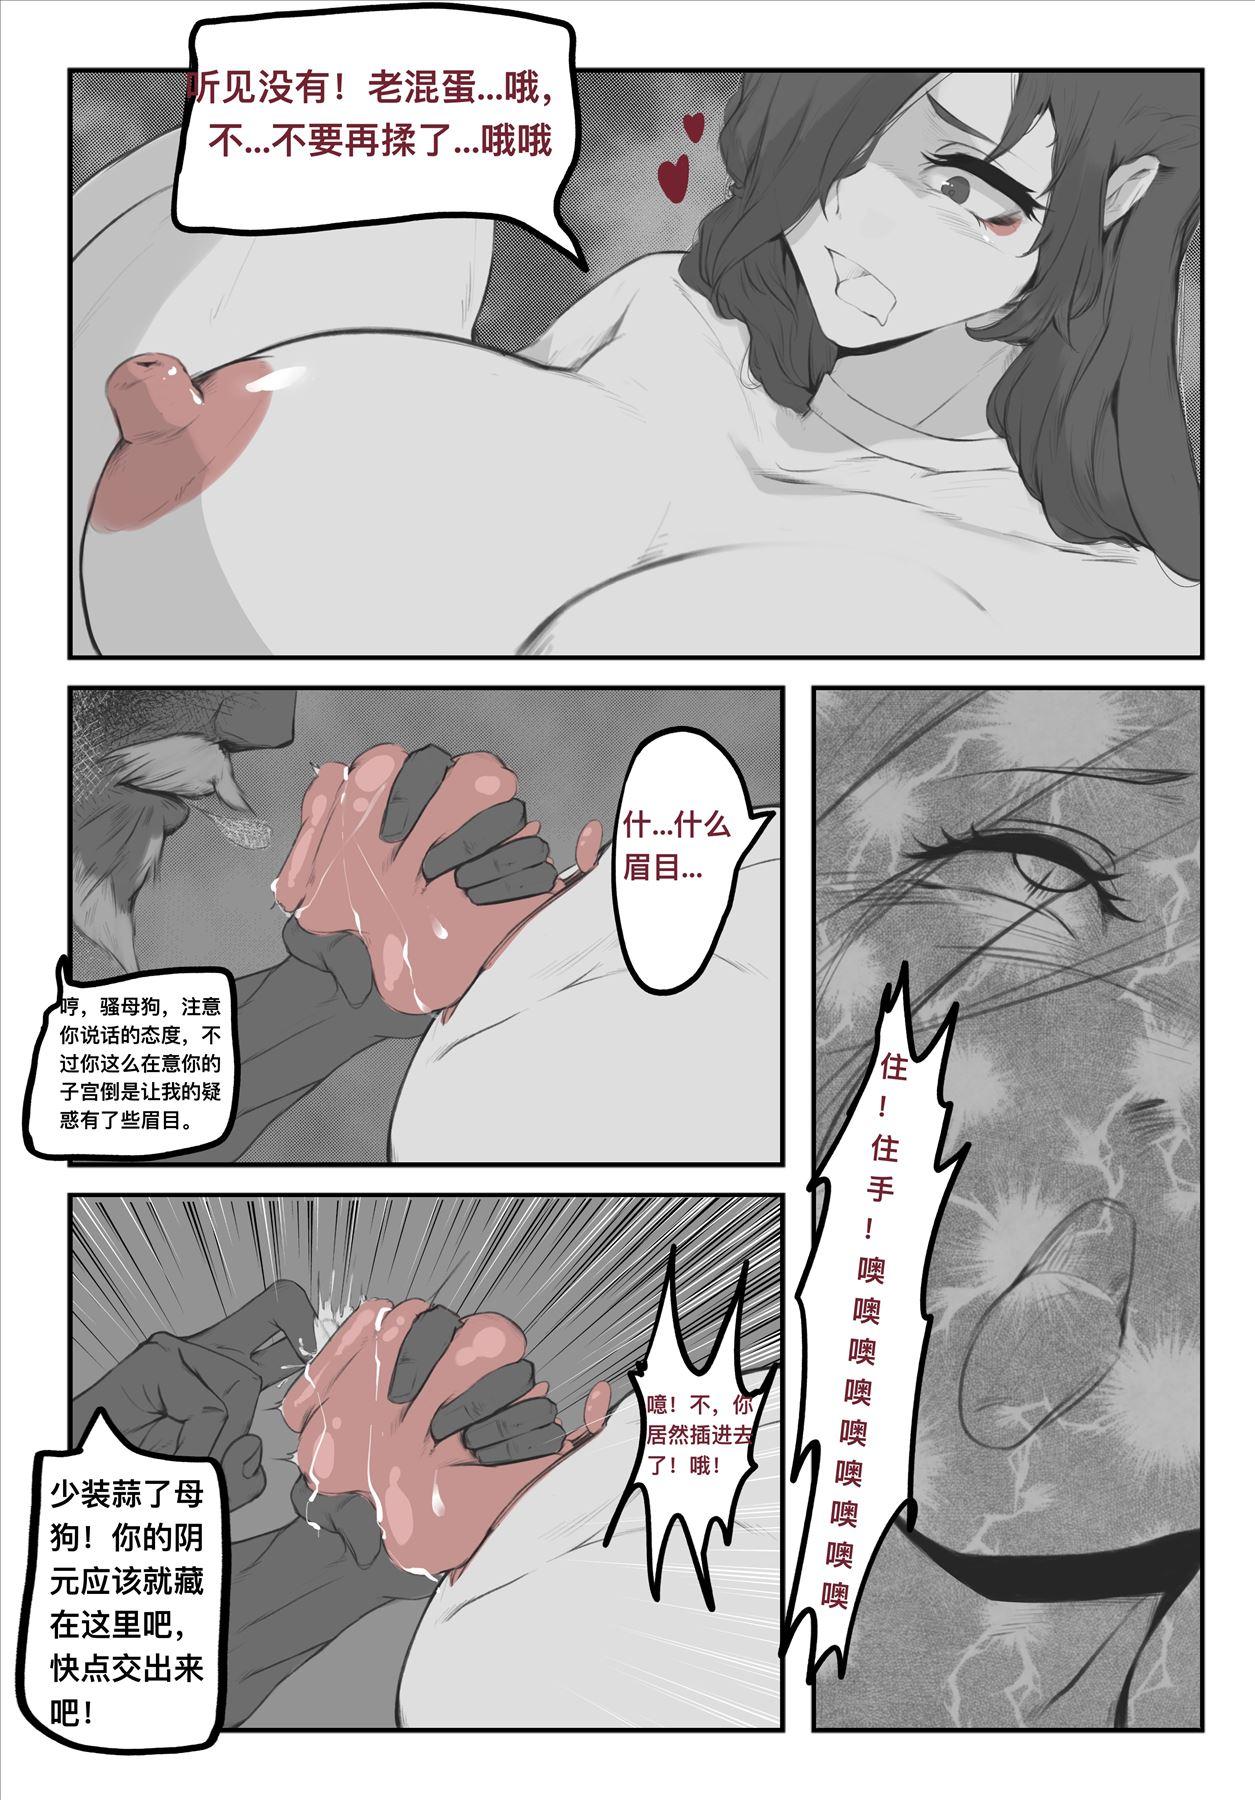 Fist 碧染2夜篇 - Original Screaming - Page 4